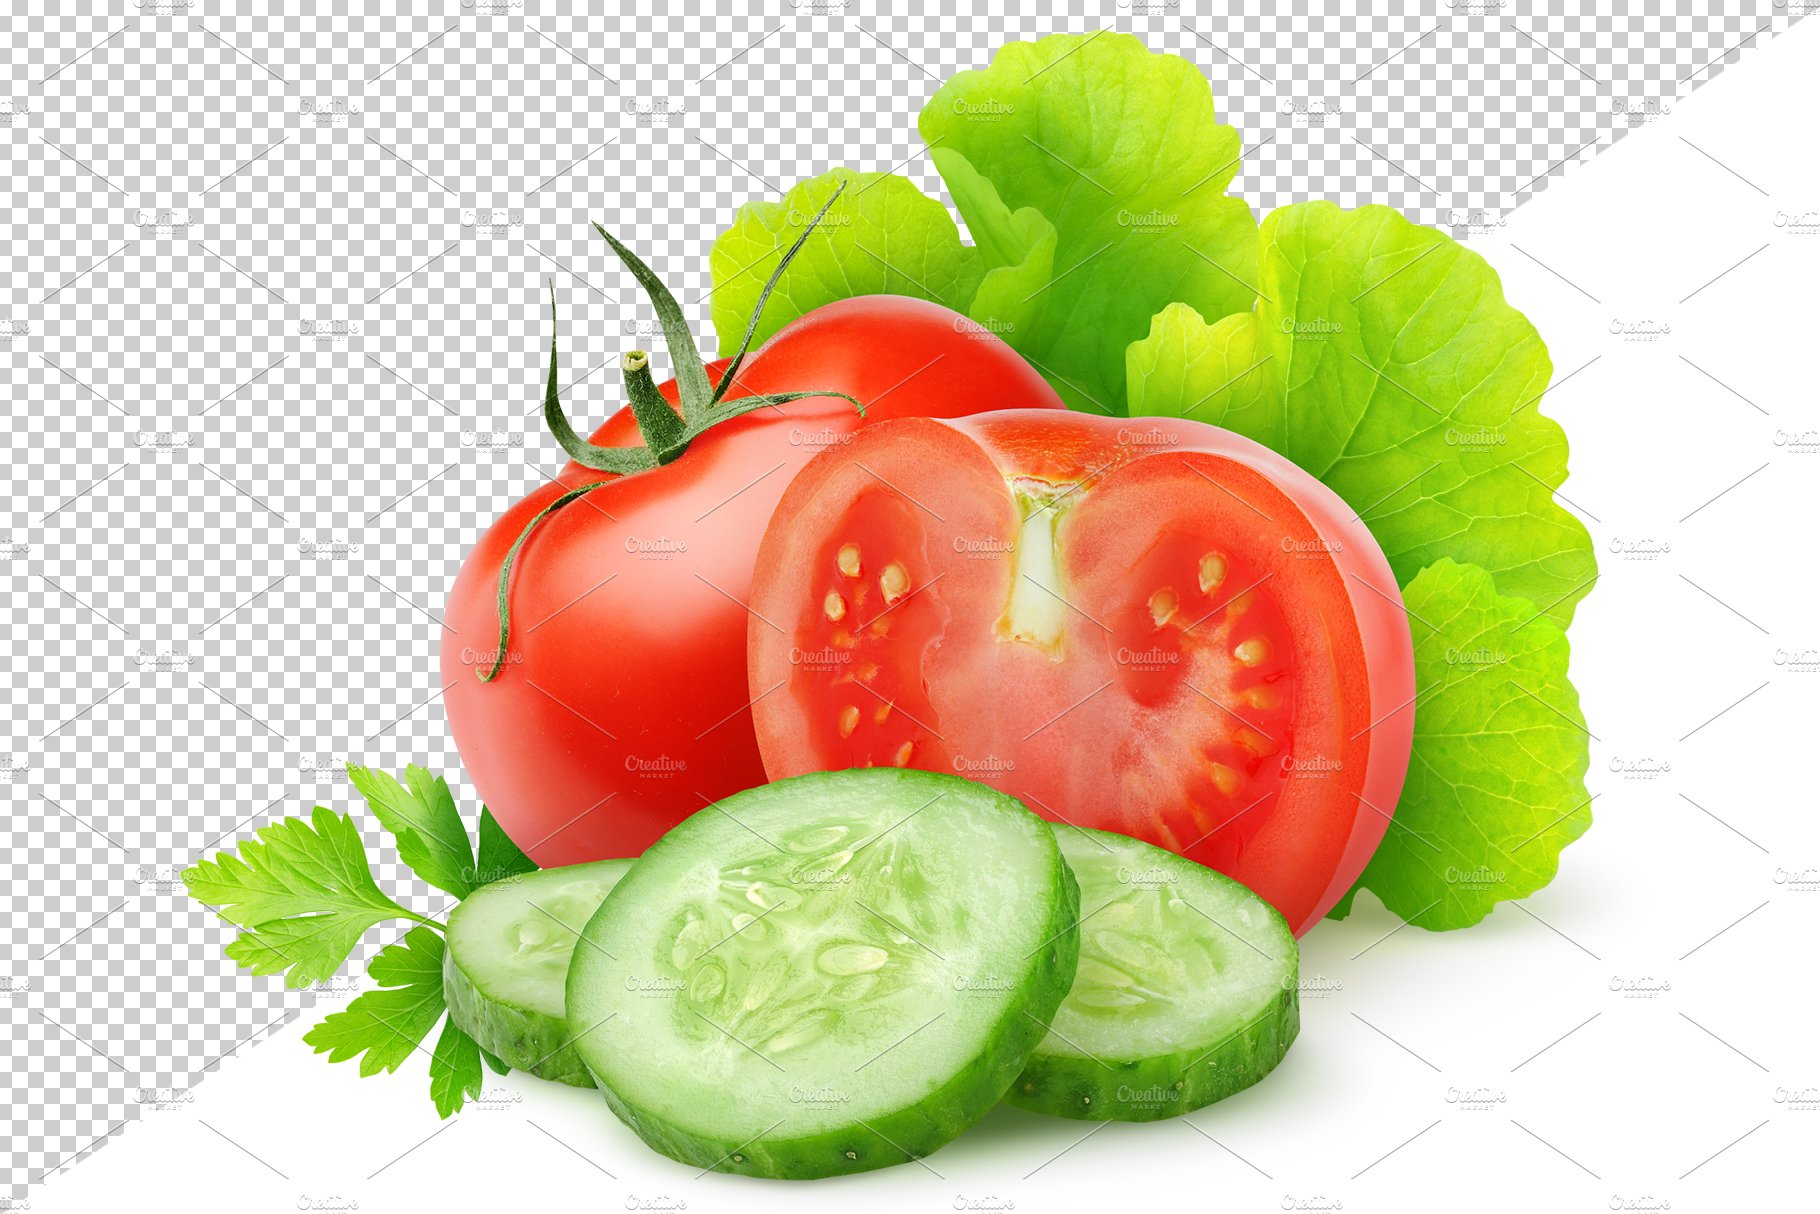 Fresh salad vegetables preview image.